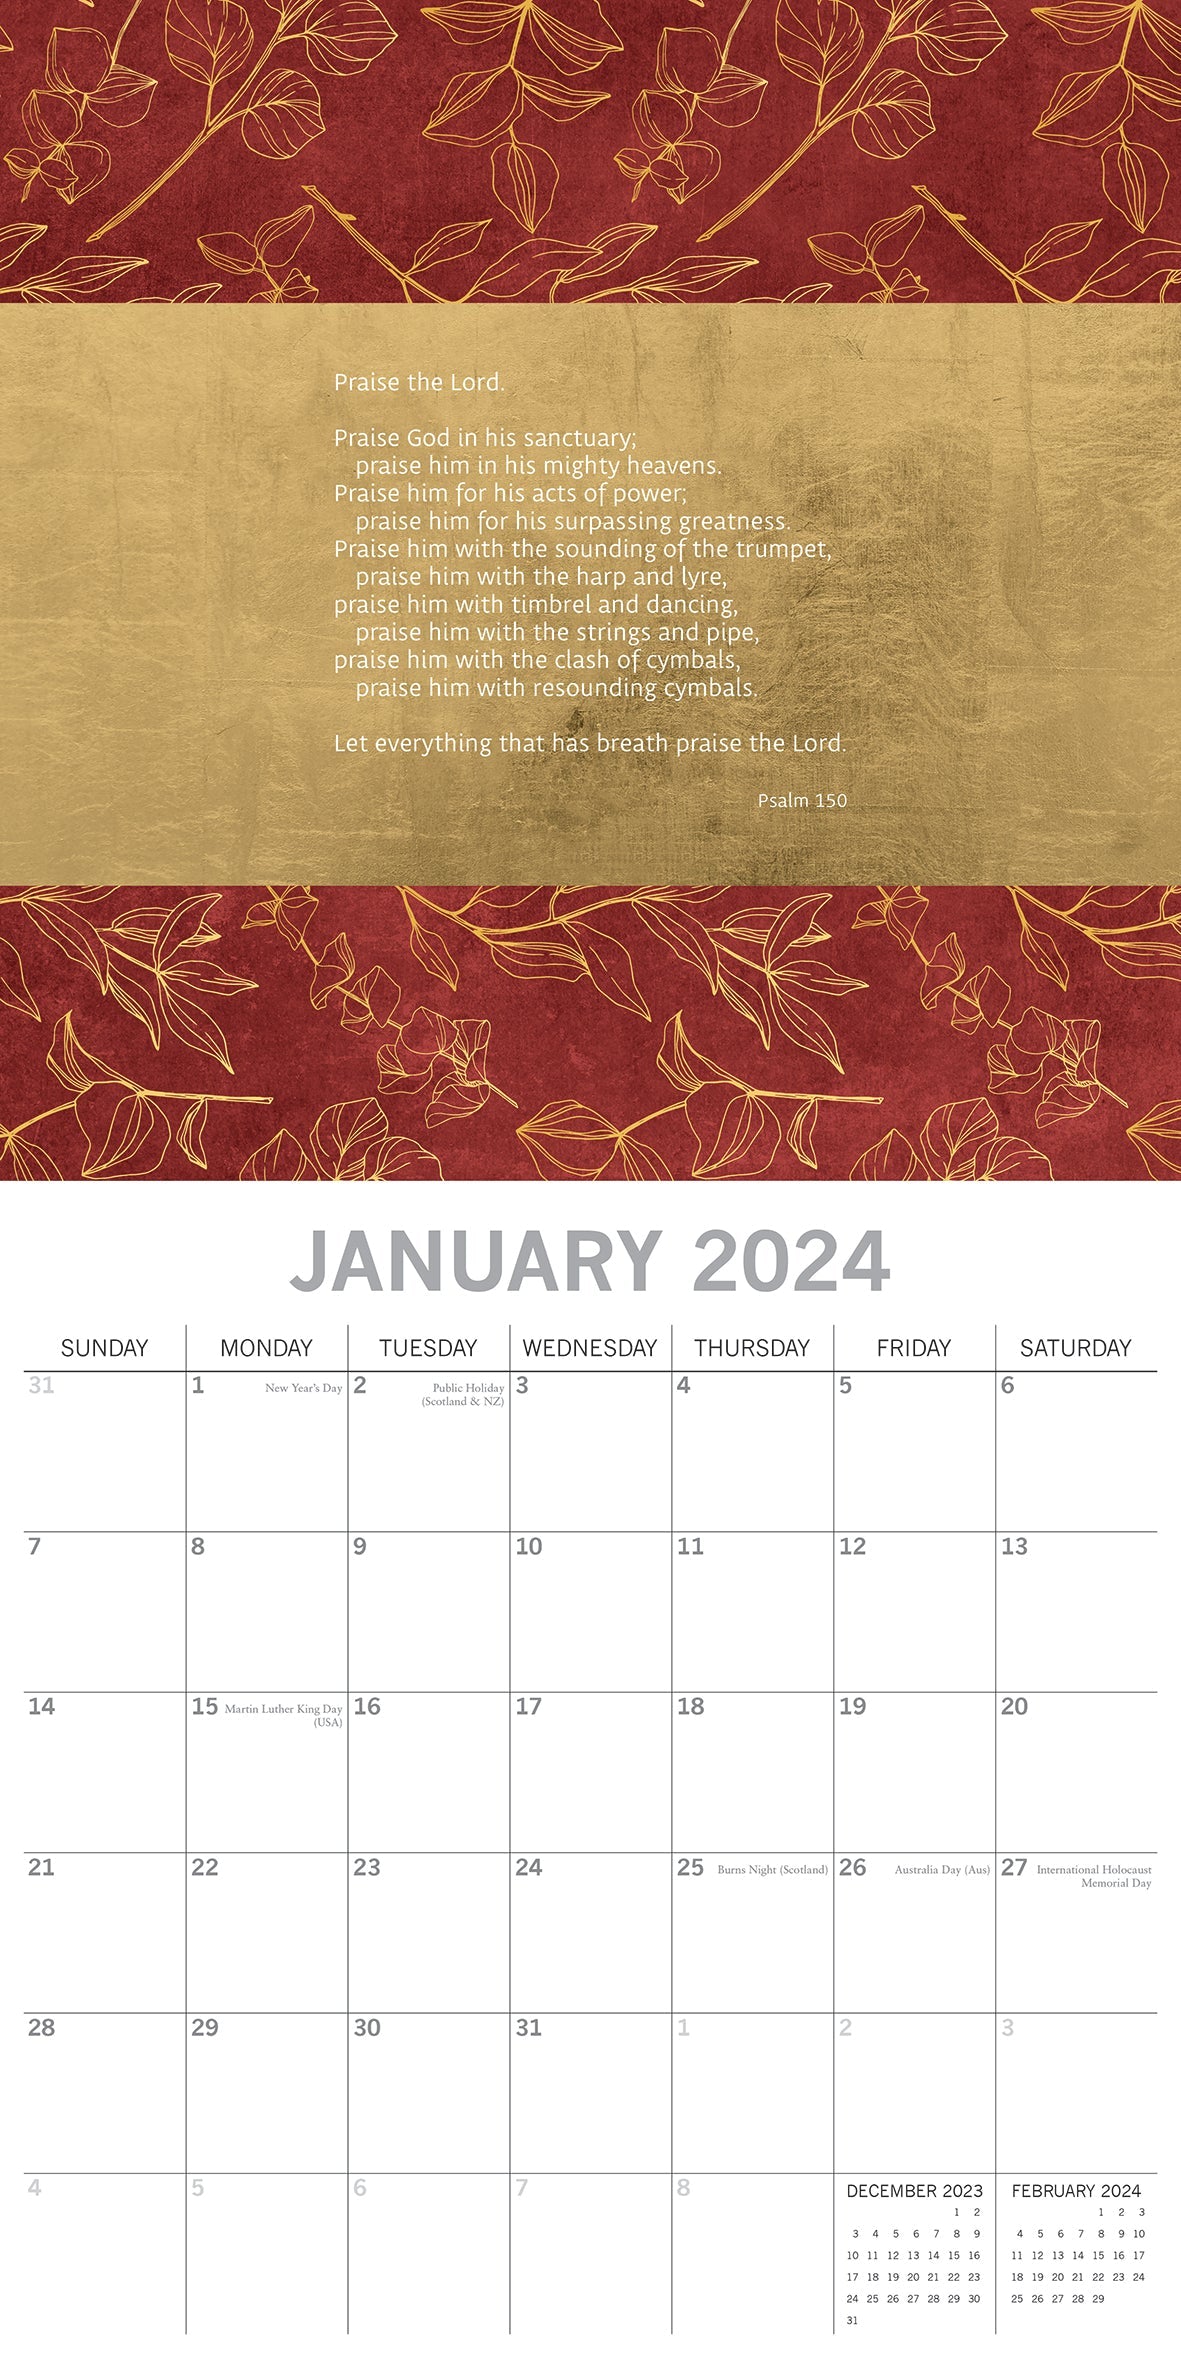 2024 Beloved Psalms - Square Wall Calendar